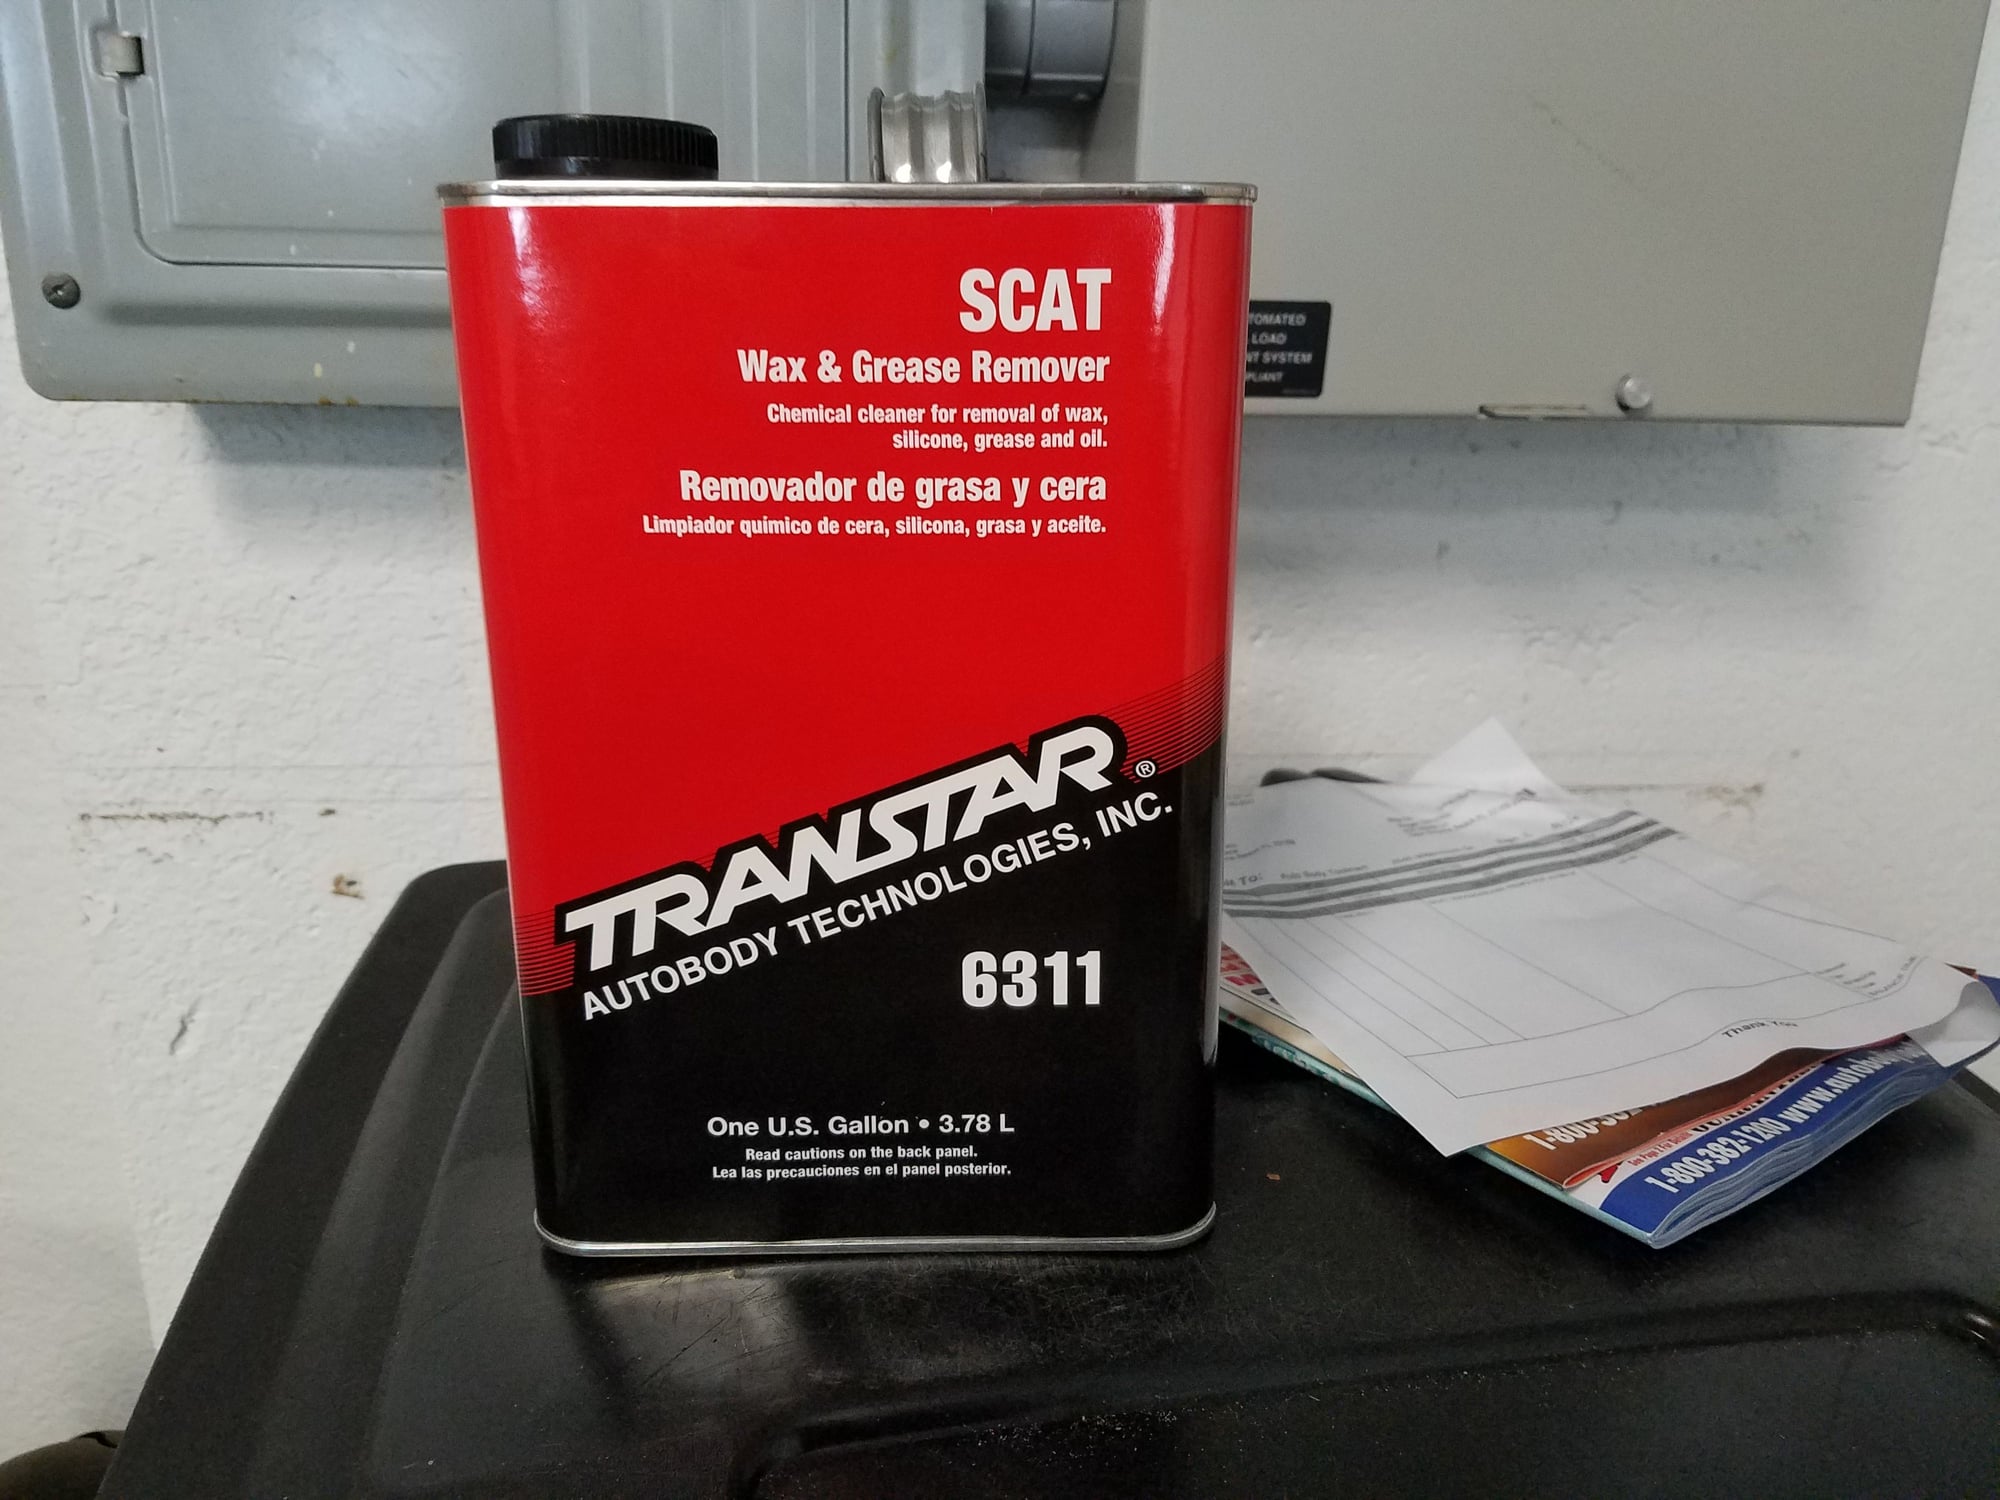 Transtar 6311 Scat Wax & Grease Remover, 1-Gallon